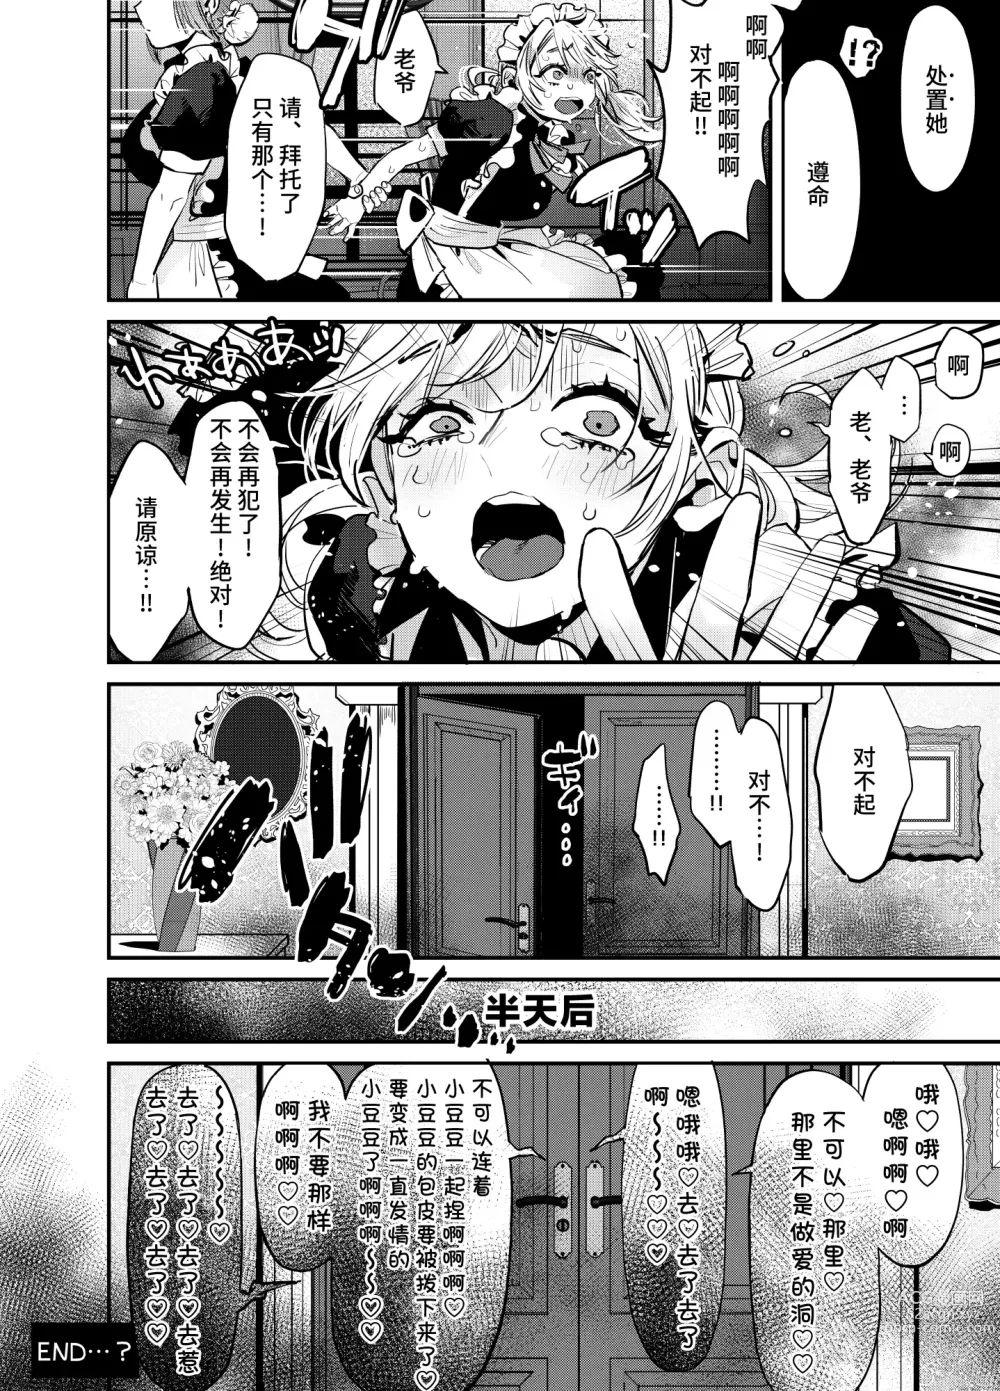 Page 6 of manga 在我身边潮吹的同事让我无法专心工作！